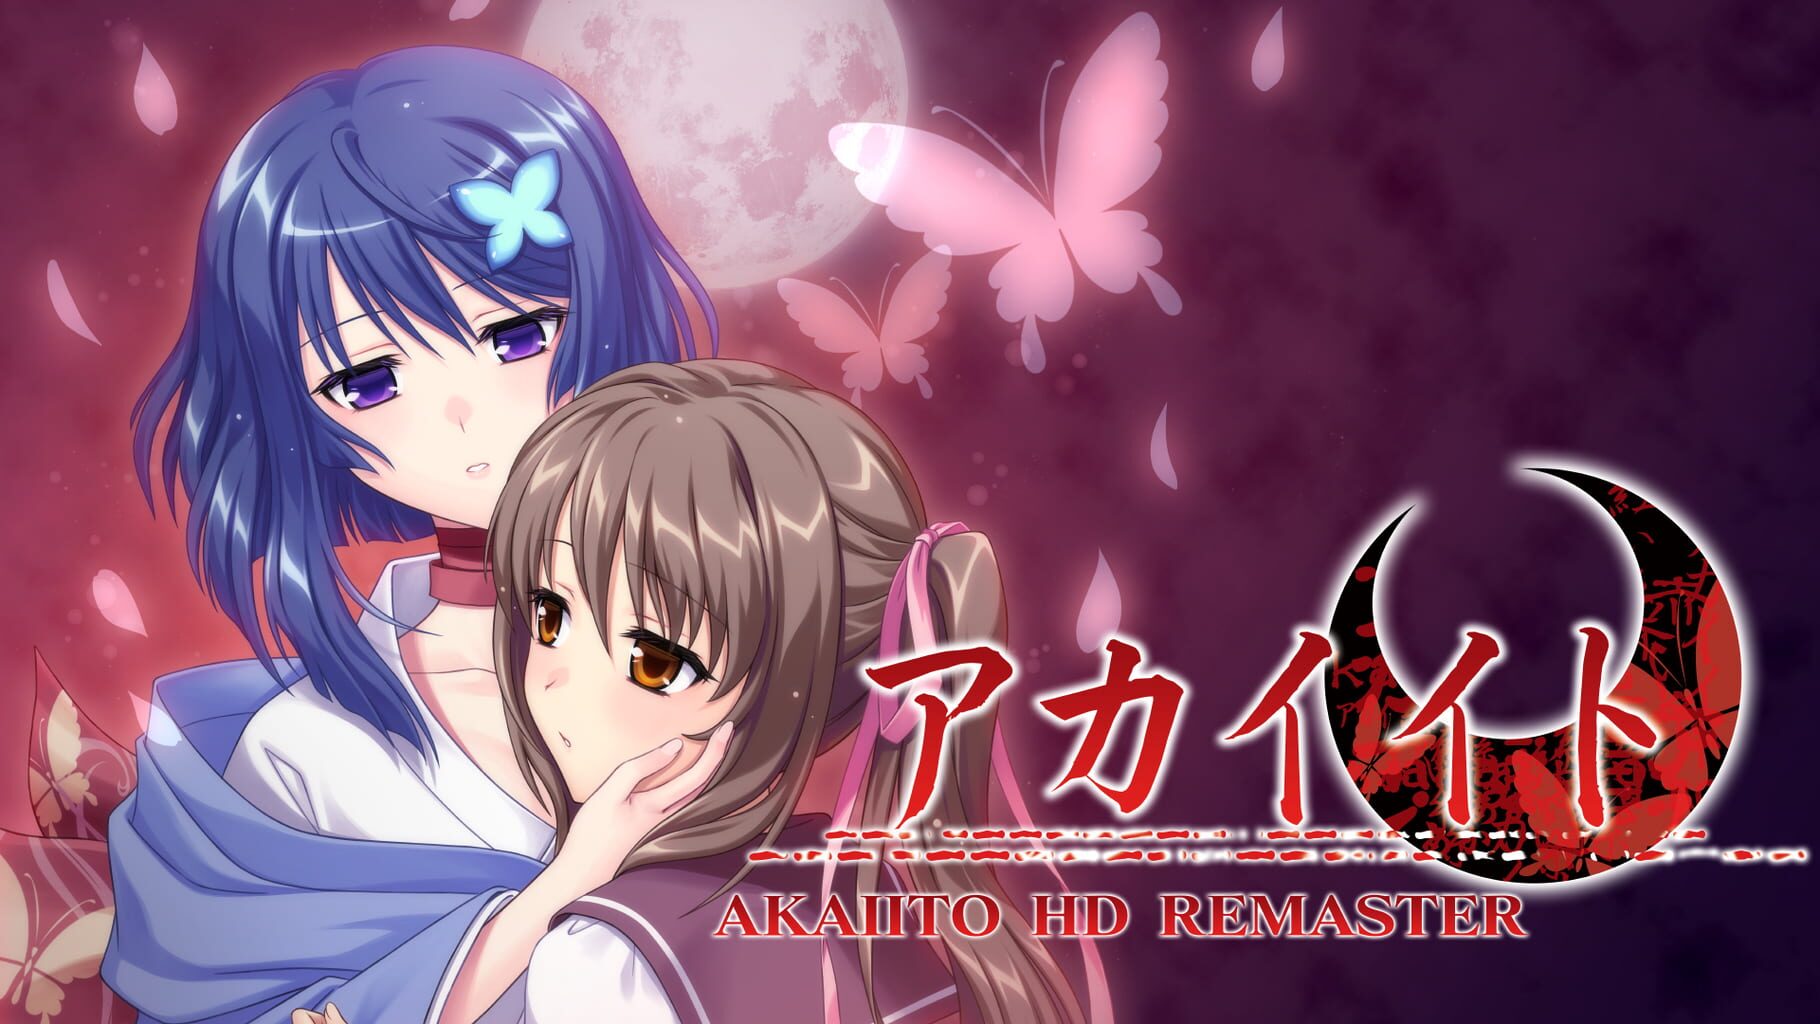 Akai Ito: HD Remaster artwork